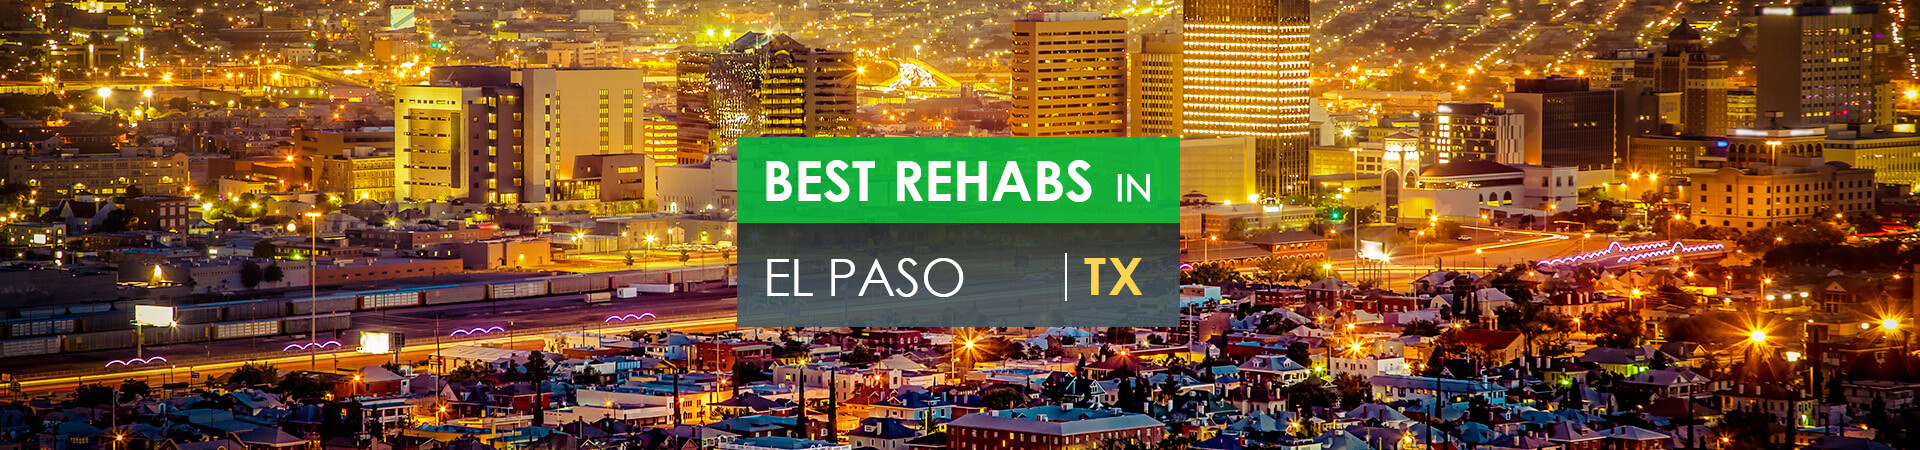 Best rehabs in El Paso, TX